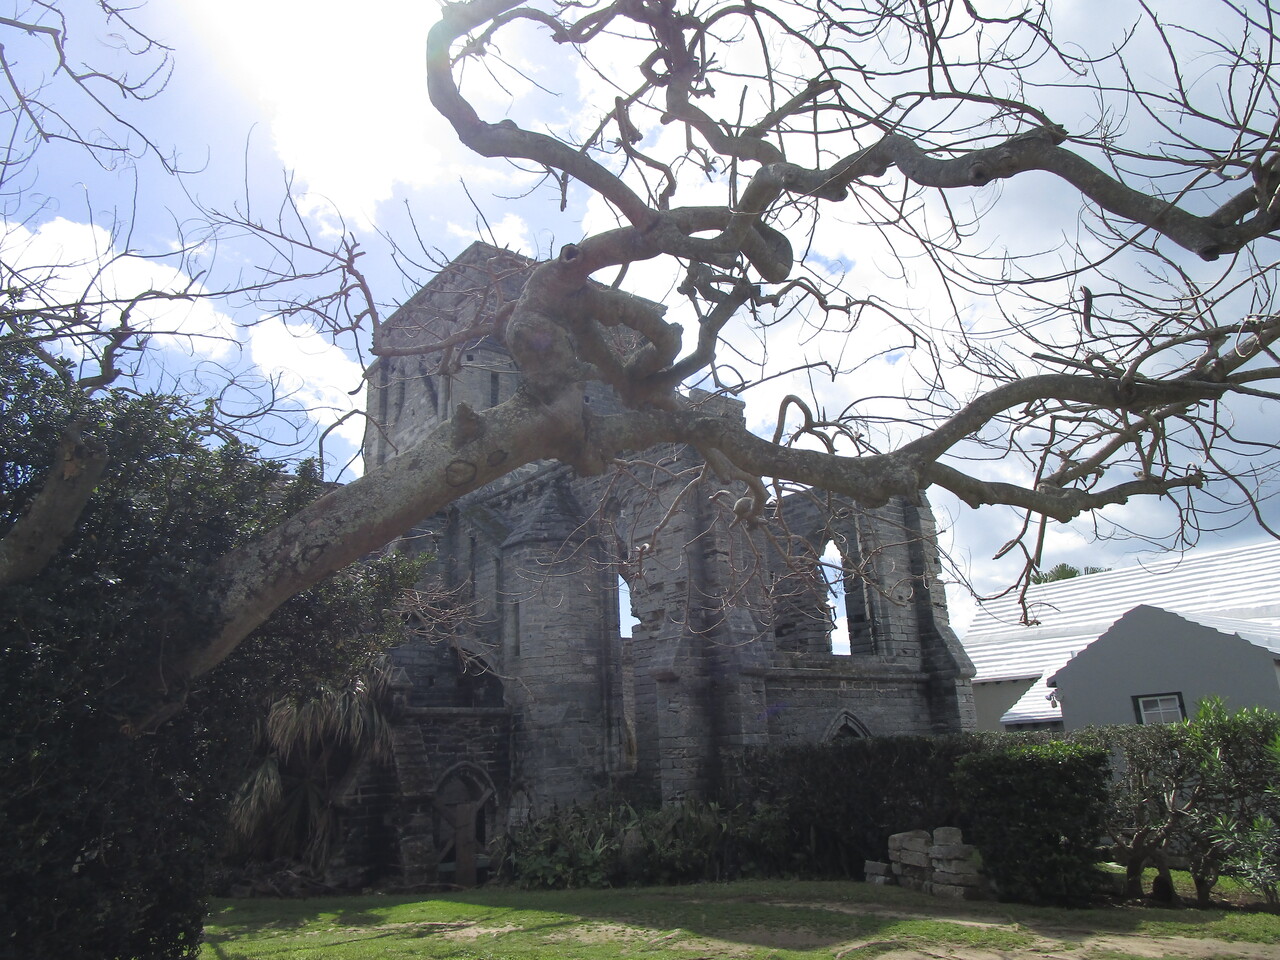 Bermuda---26-Tree-behind-Unfinished-Church.JPG